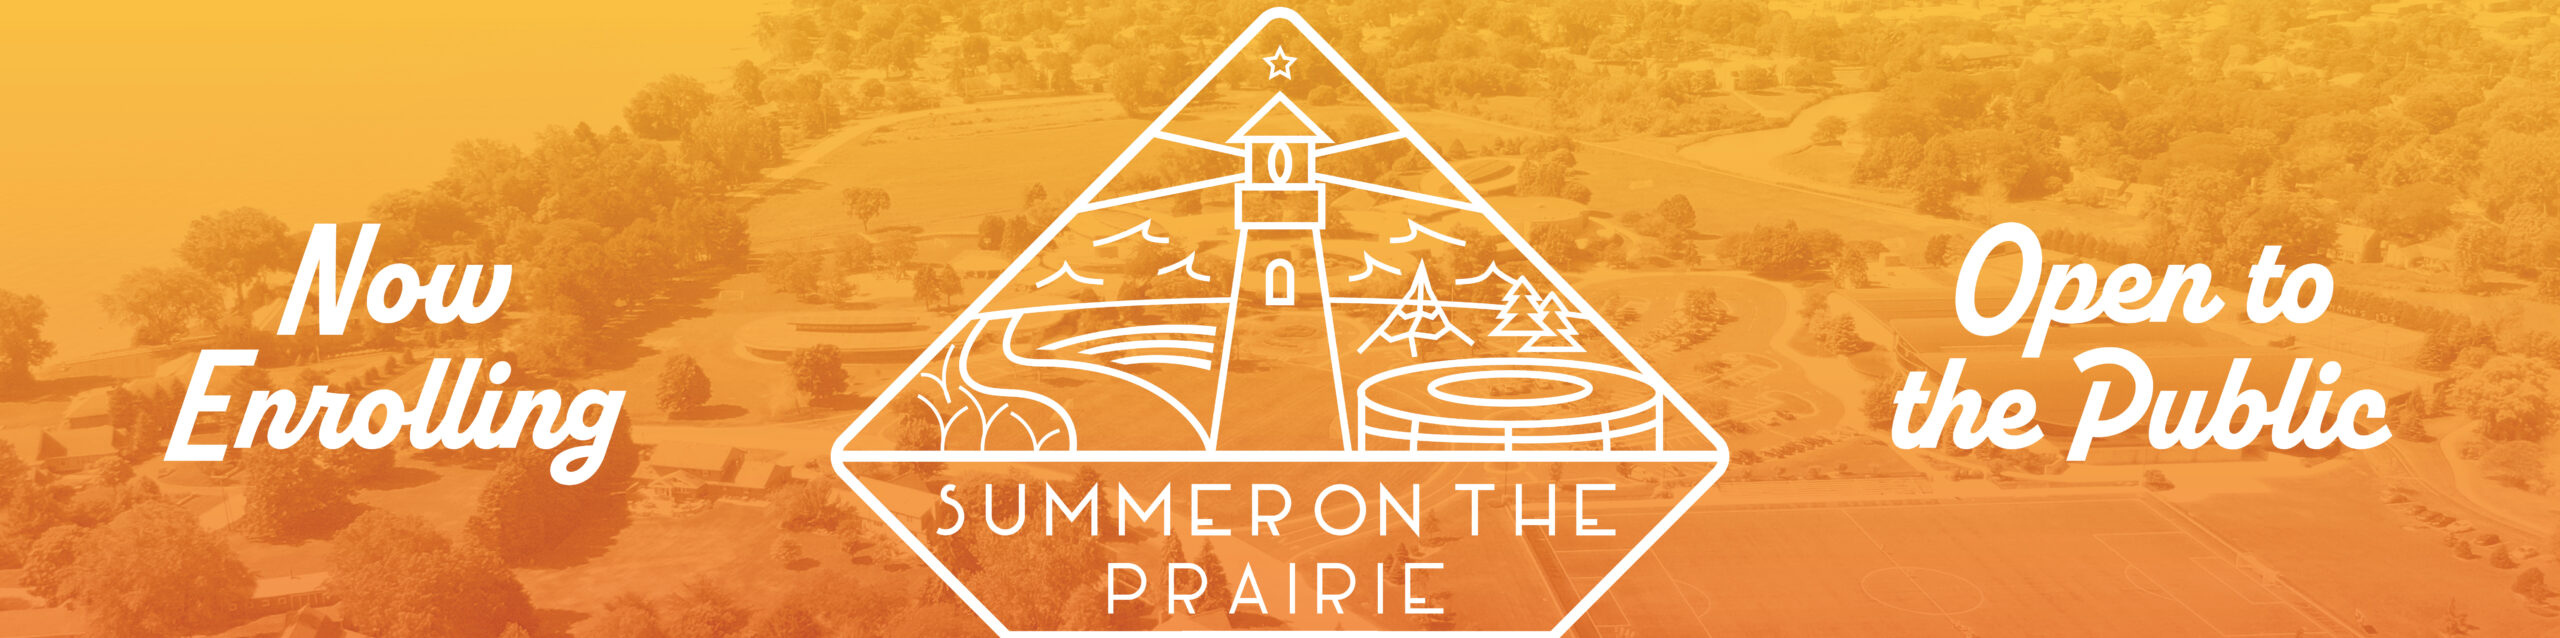 Summer on the Prairie